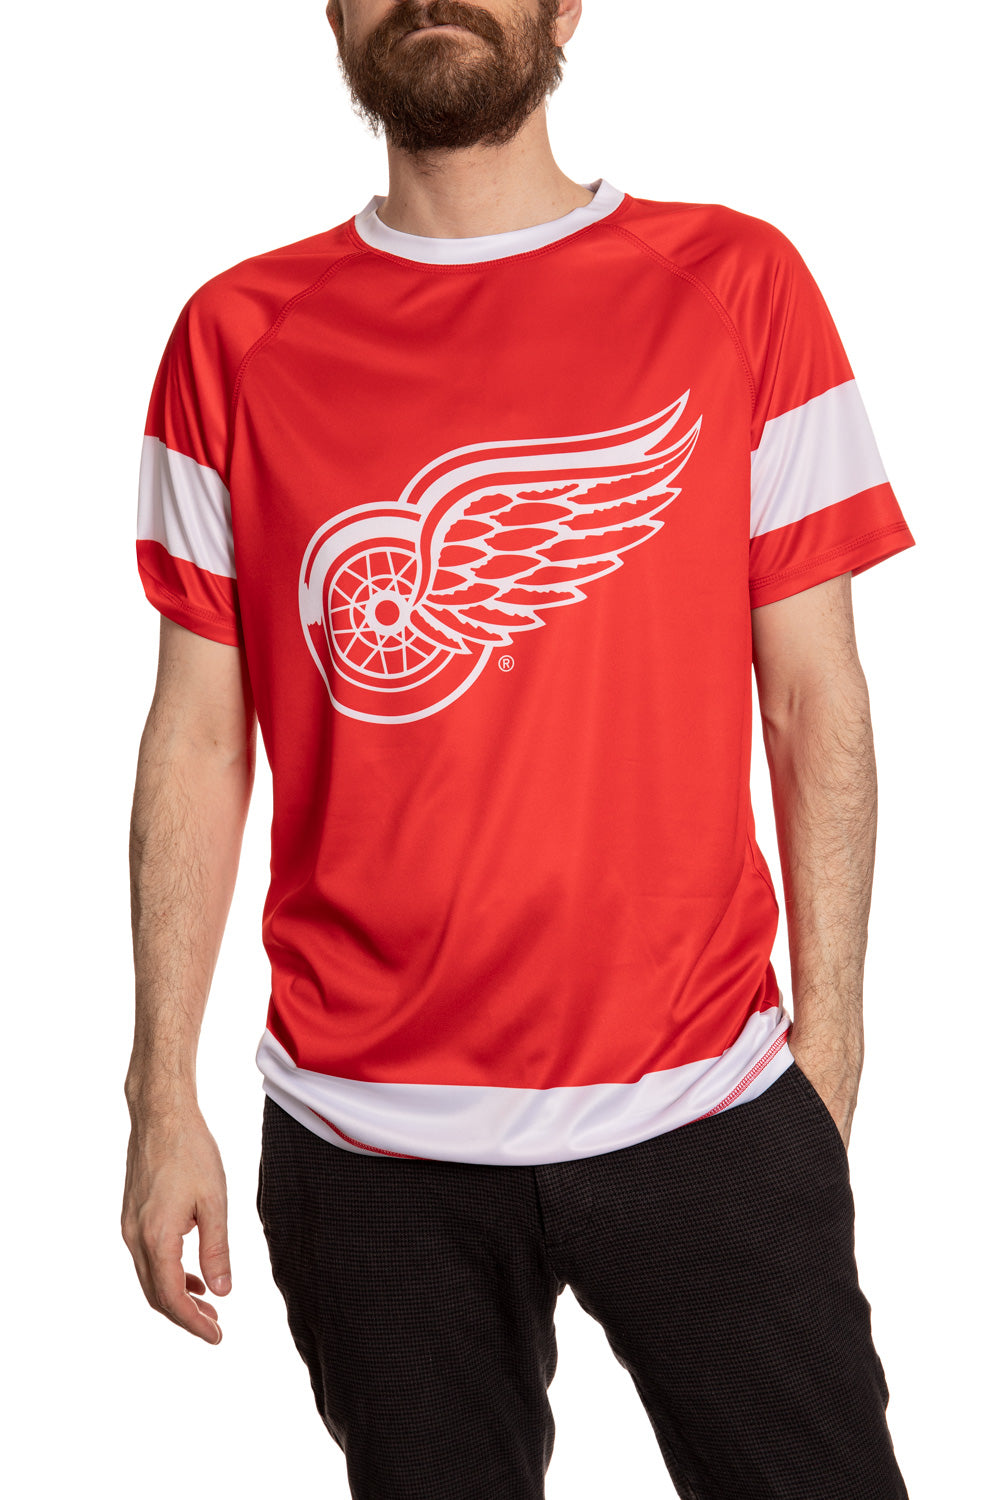 Detroit Red Wings Short Sleeve Game Day Rashguard